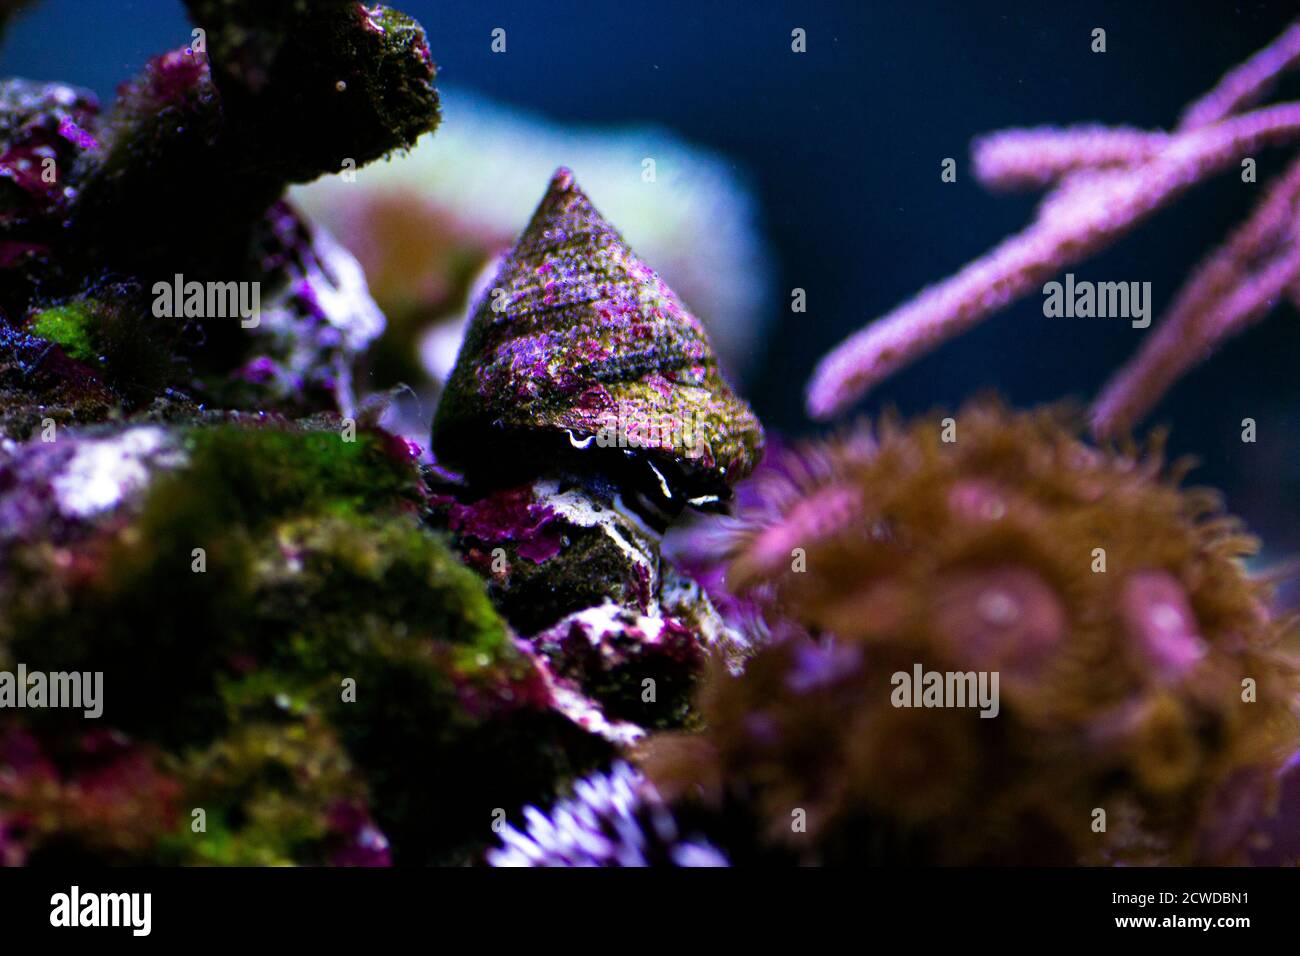 Saltwater Trochus snail in reef aquarium tank Stock Photo